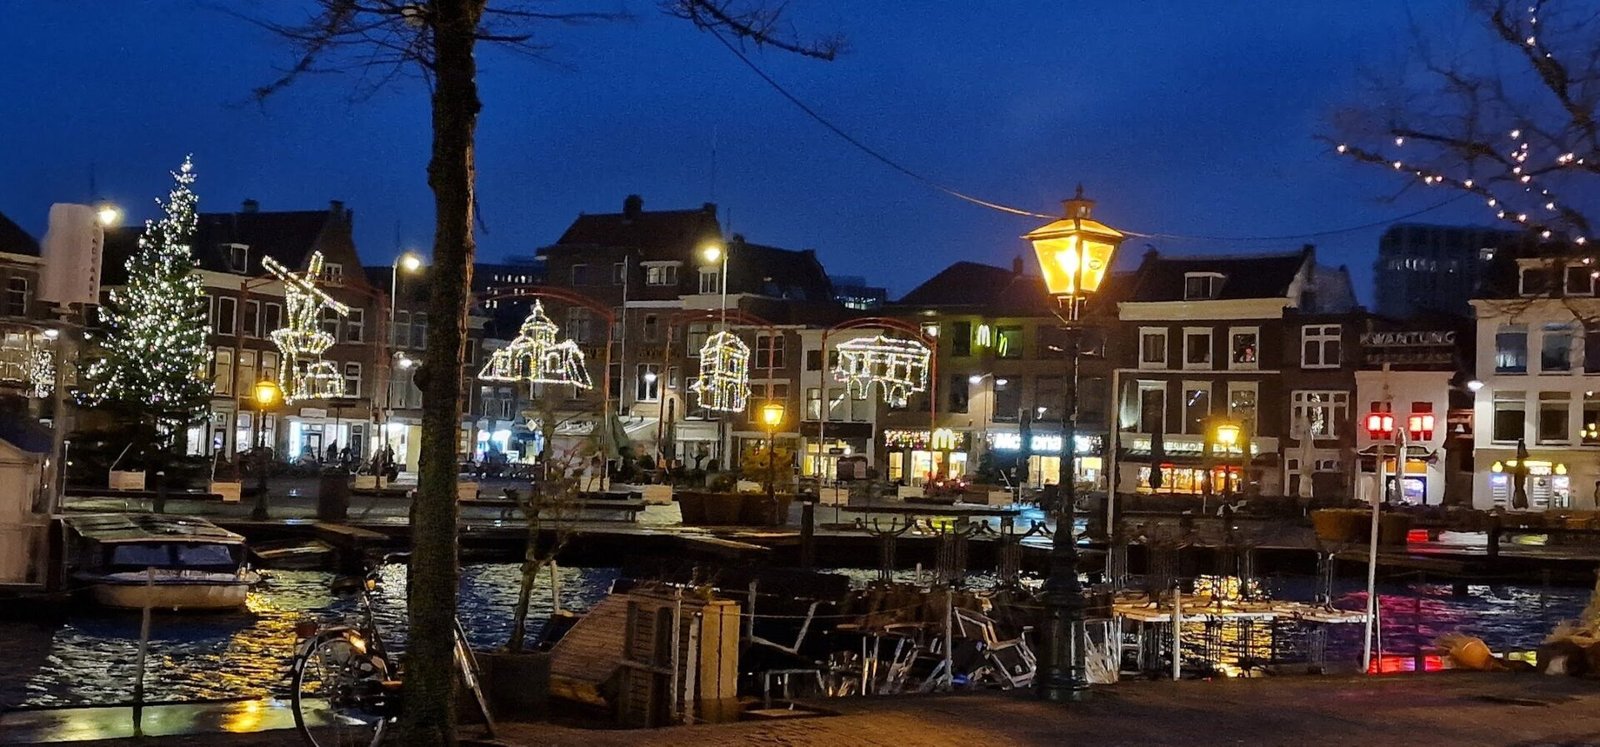 Leiden in the holiday season